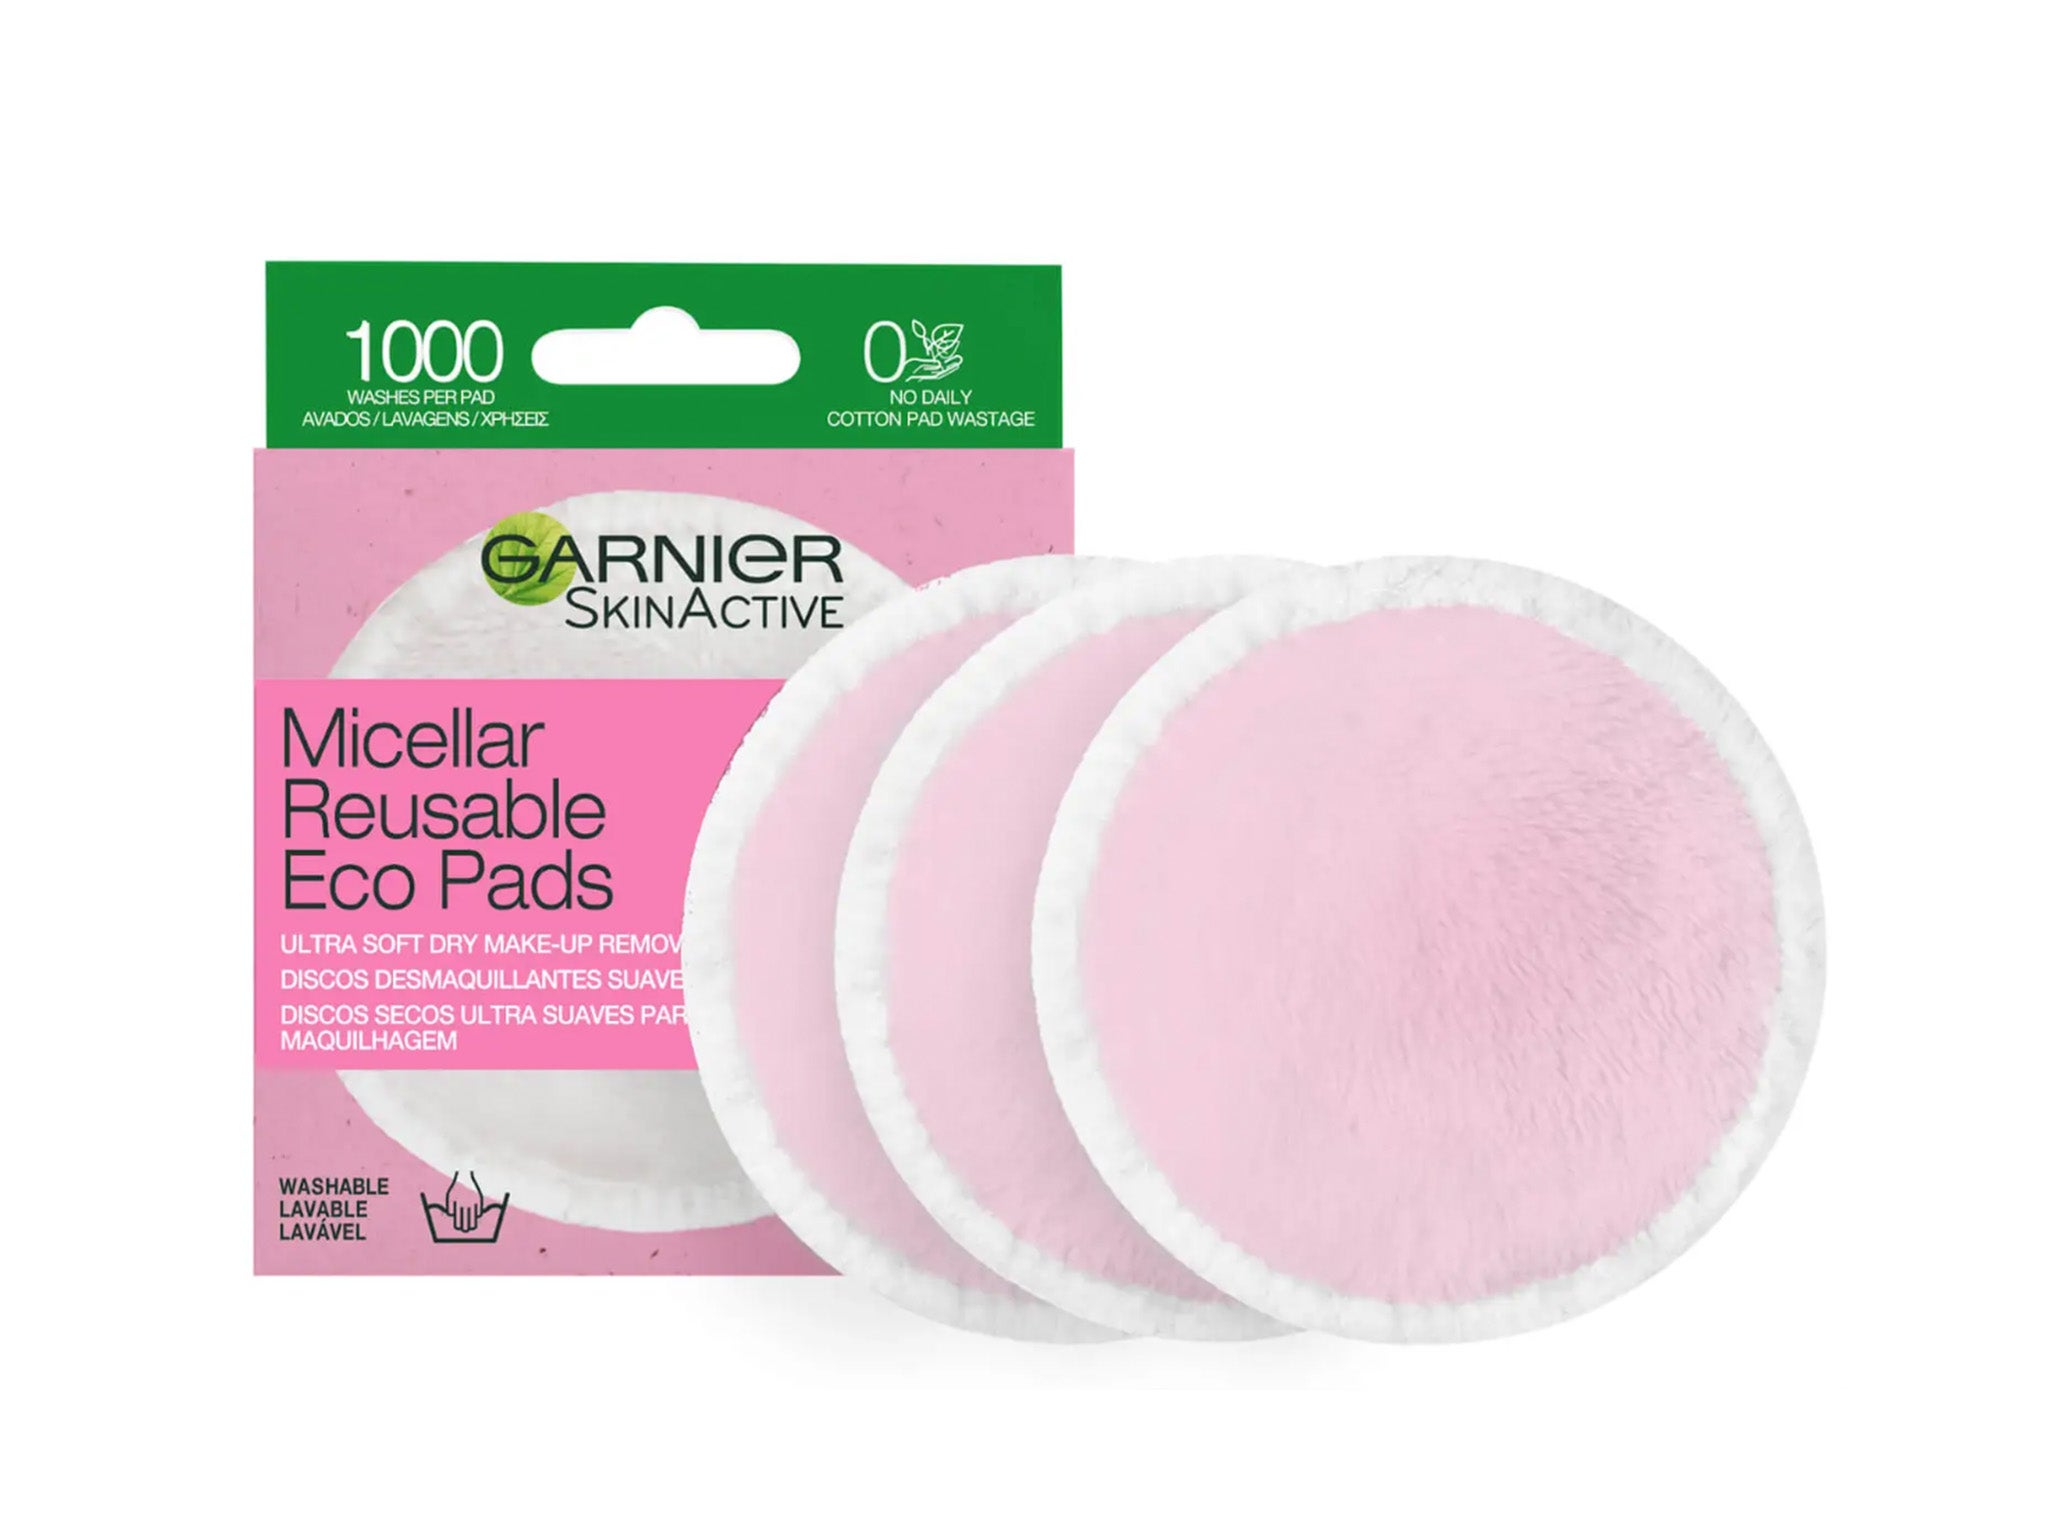 Garnier micellar reusable make-up remover eco pads